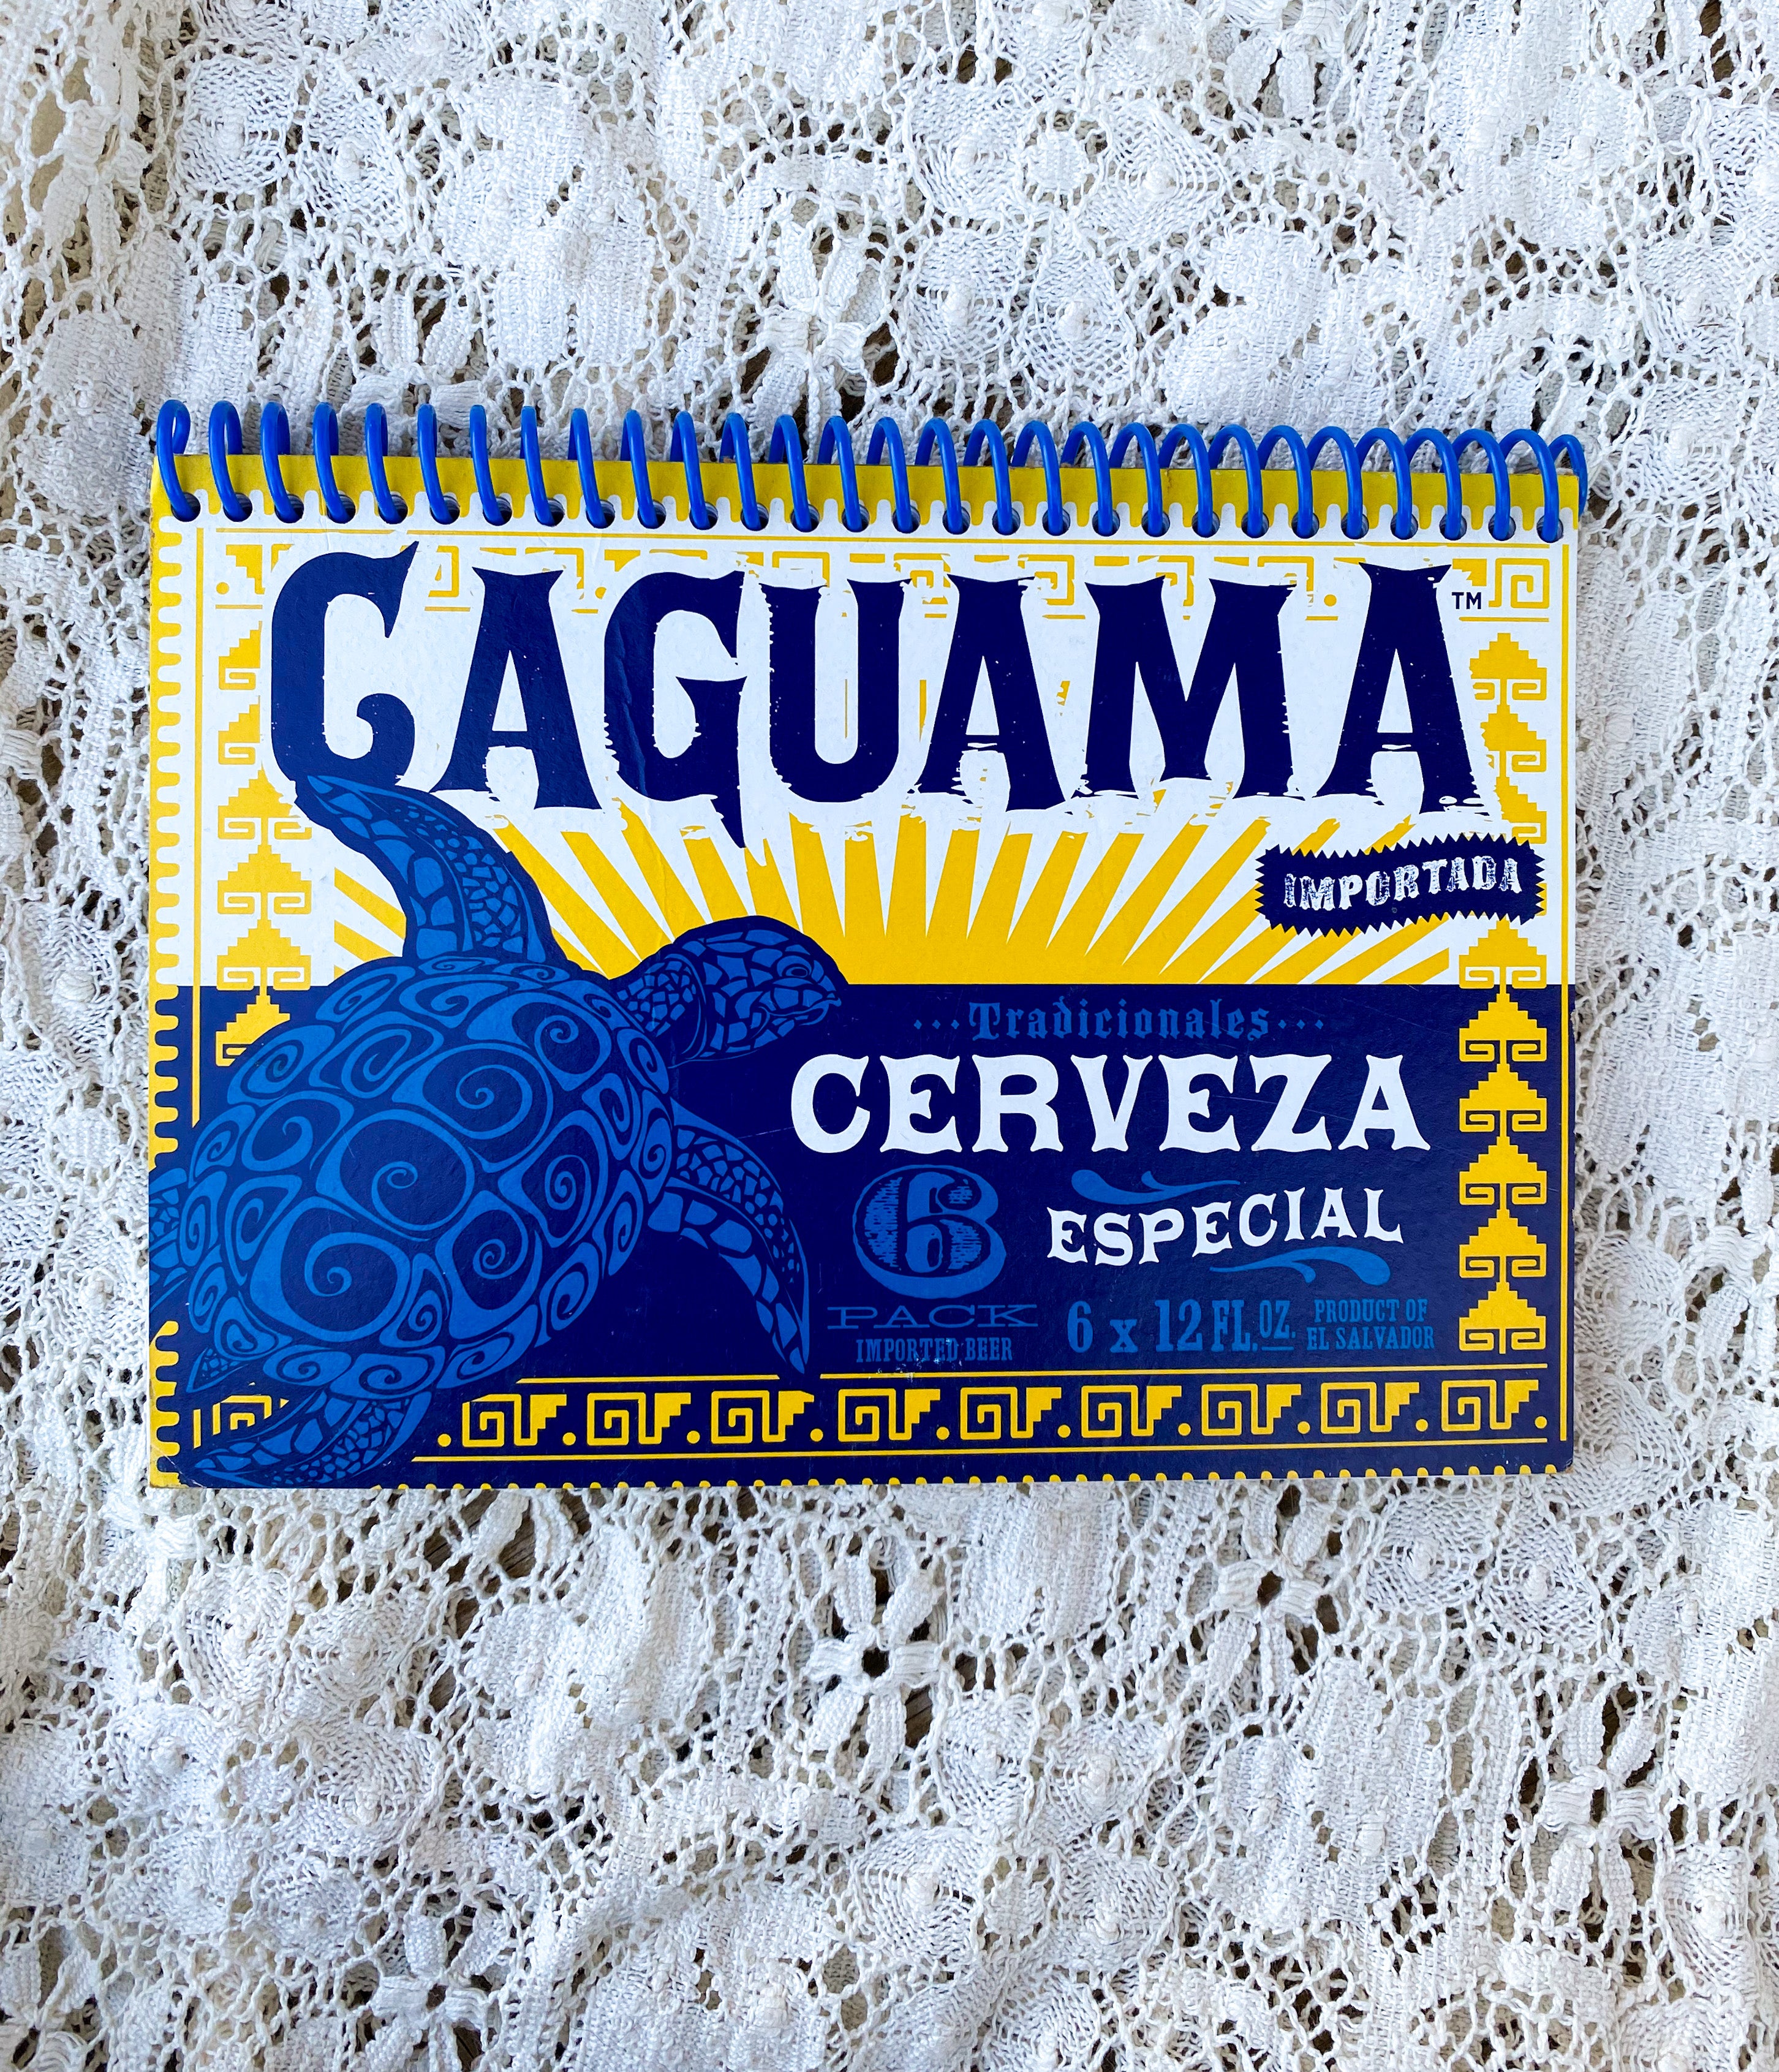 Gaguama Cerveza Especial Recycled Beer Carton Notebook